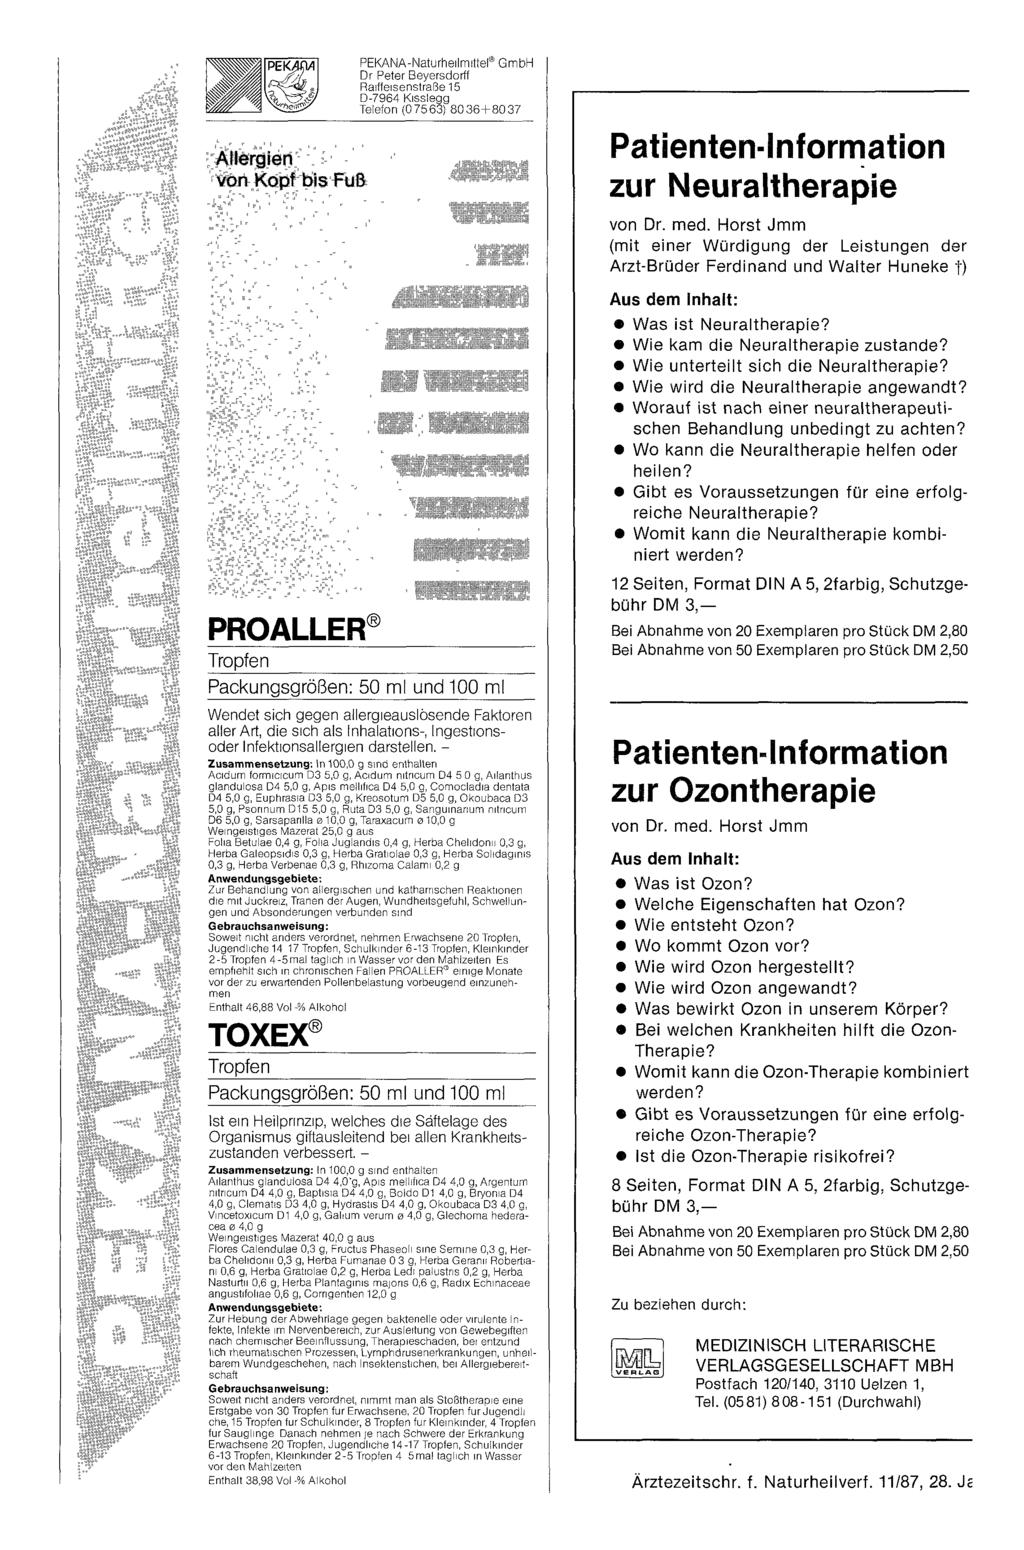 PEKANA-Naturheilmittel GmbH Dr Peter Beyersdorff Raiffeisenstraße 15 D-7964 Kisslegg Telefon (07563) 80 36+8037 Patienten-Information zur Neuraltherapie J ^ PROALLER 3 Tropfen Packungsgrößen: 50 ml